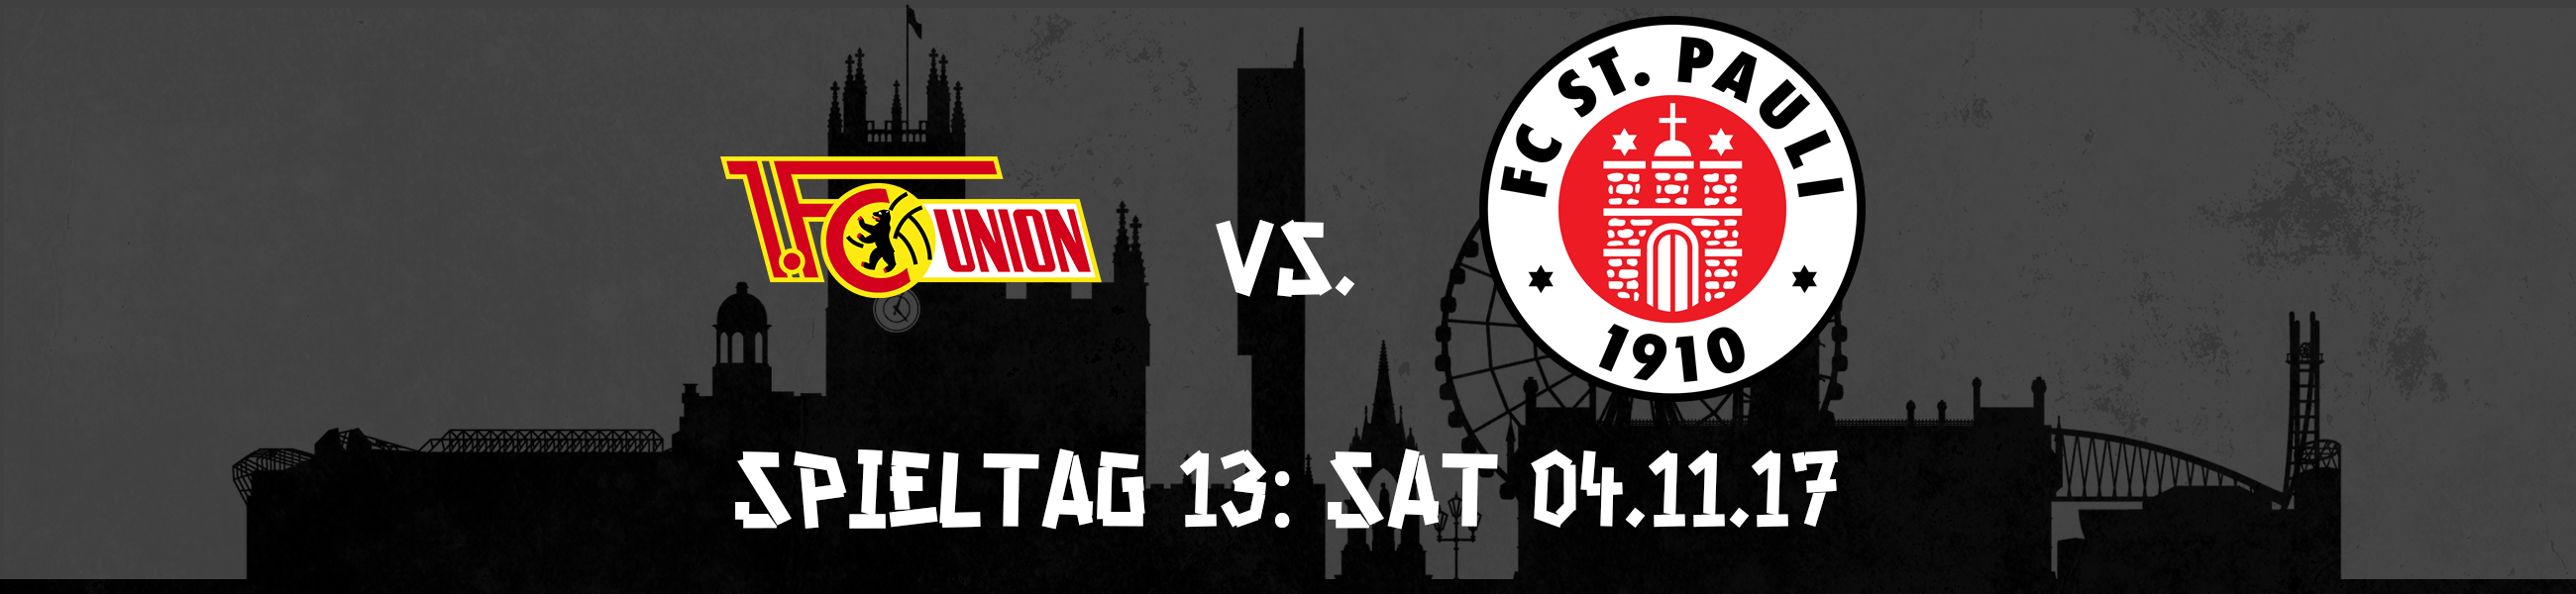 Spieltag 13: FC Union Berlin - FC St. Pauli